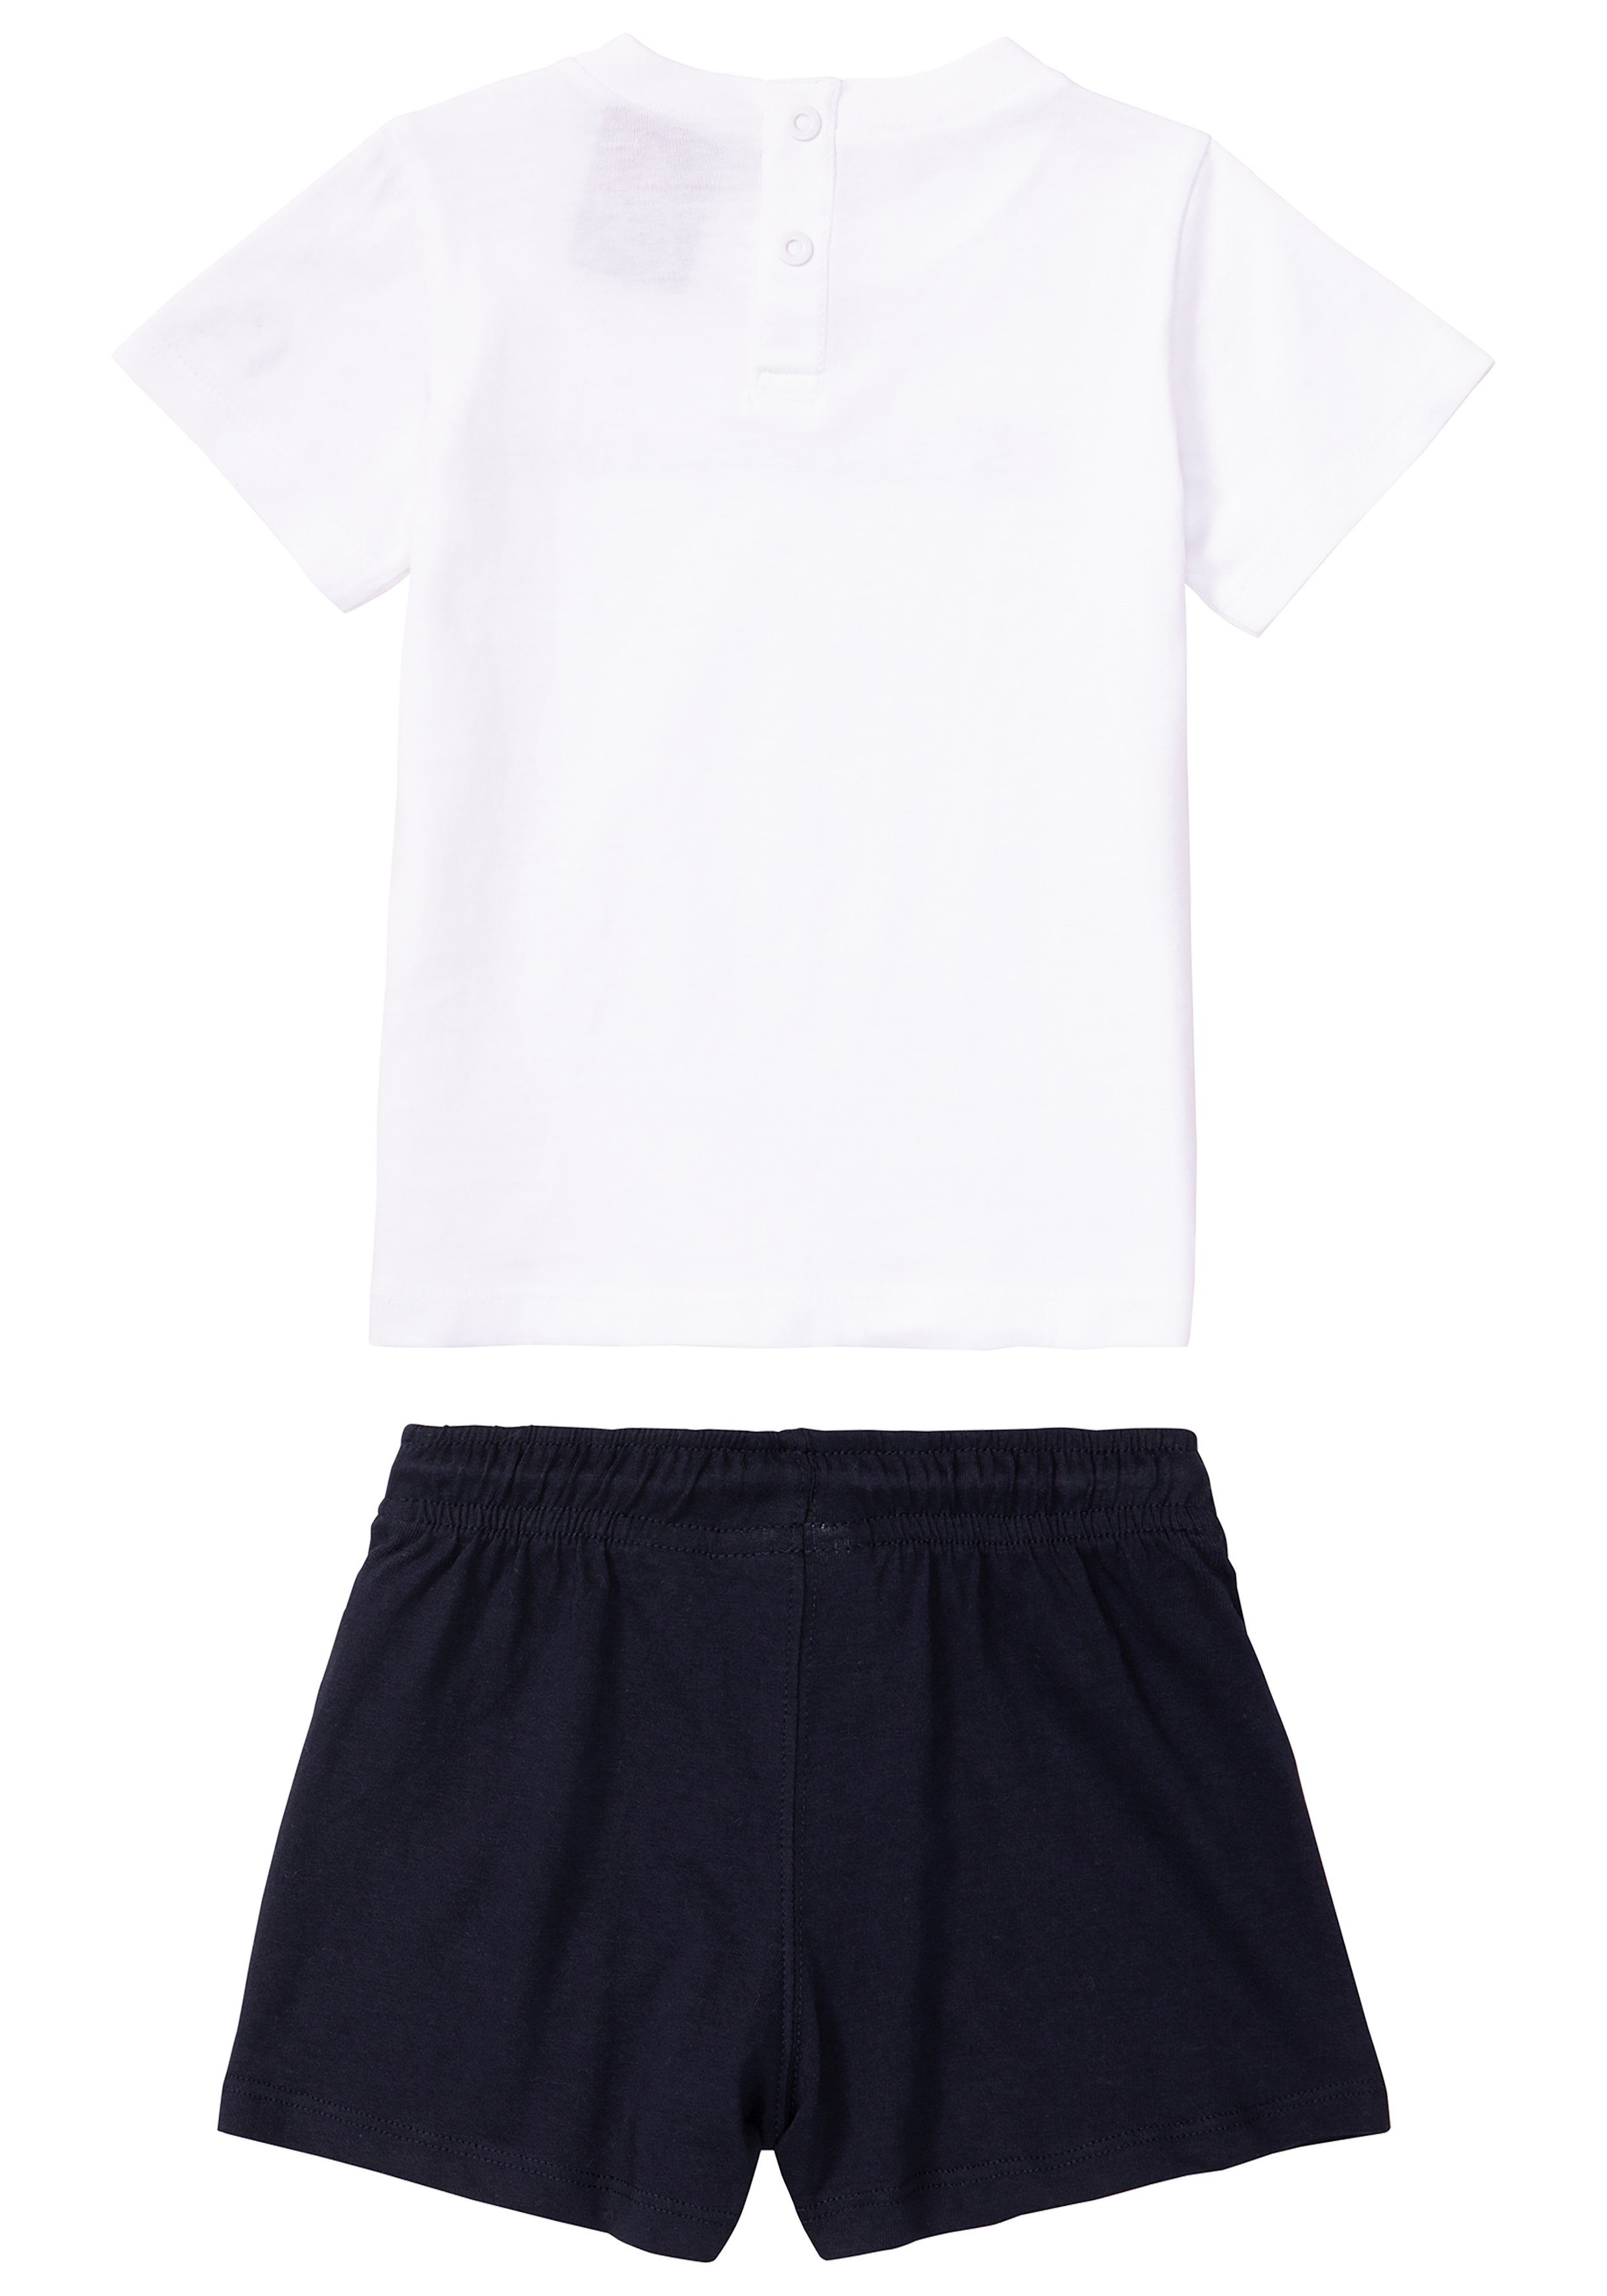 Champion T-shirt & short Icons Toddler Short Sleeve Set (2)